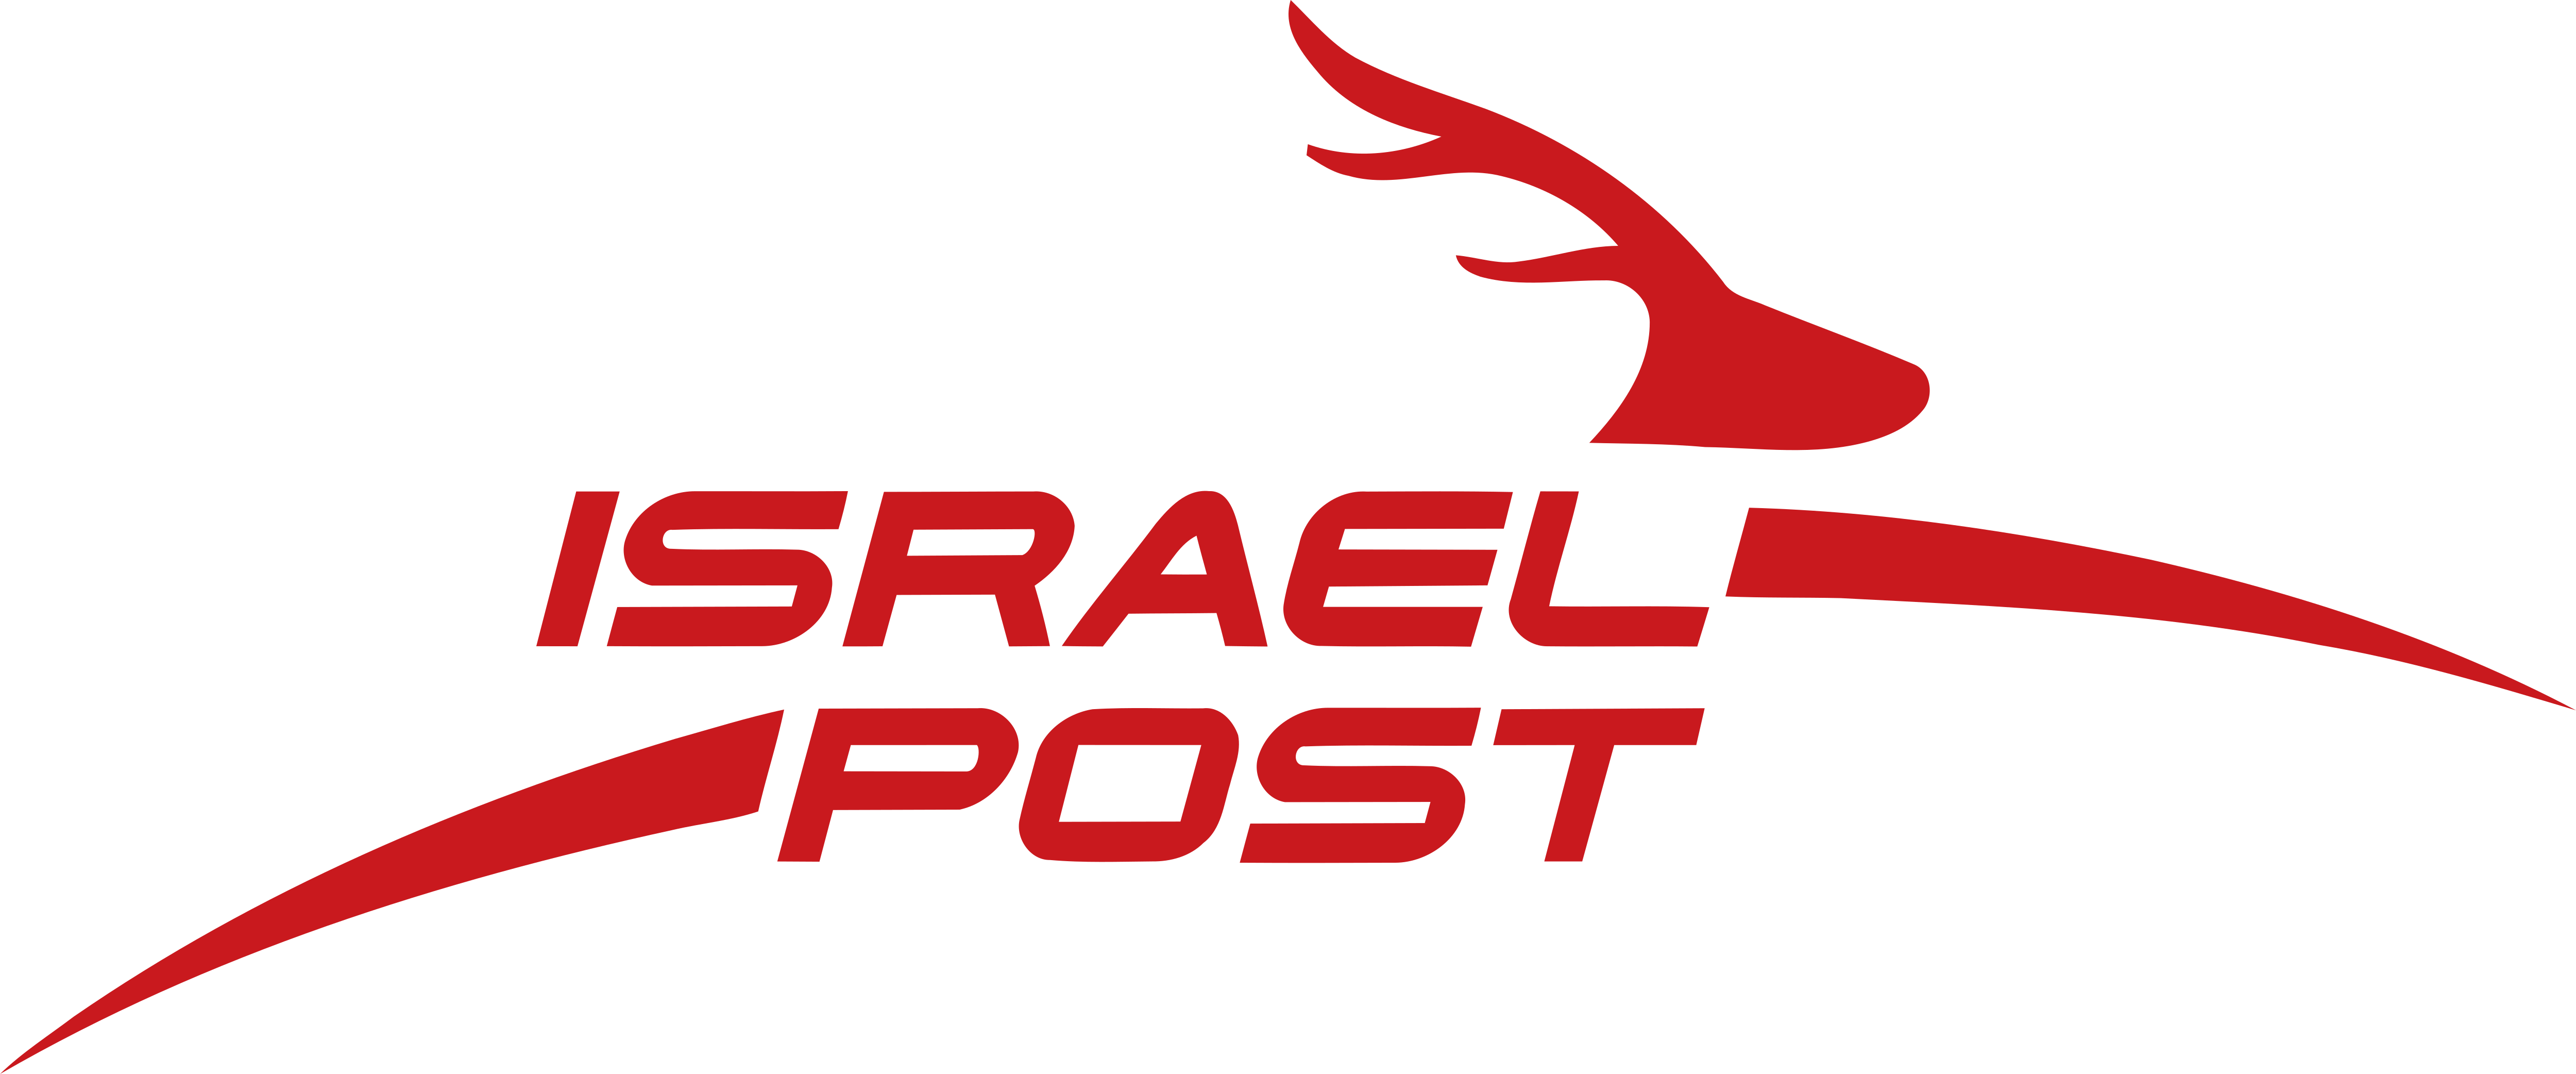 U post. Почта Израиля. Почта Израиля логотип. Почтовое отделение в Израиле. Исраел пост.